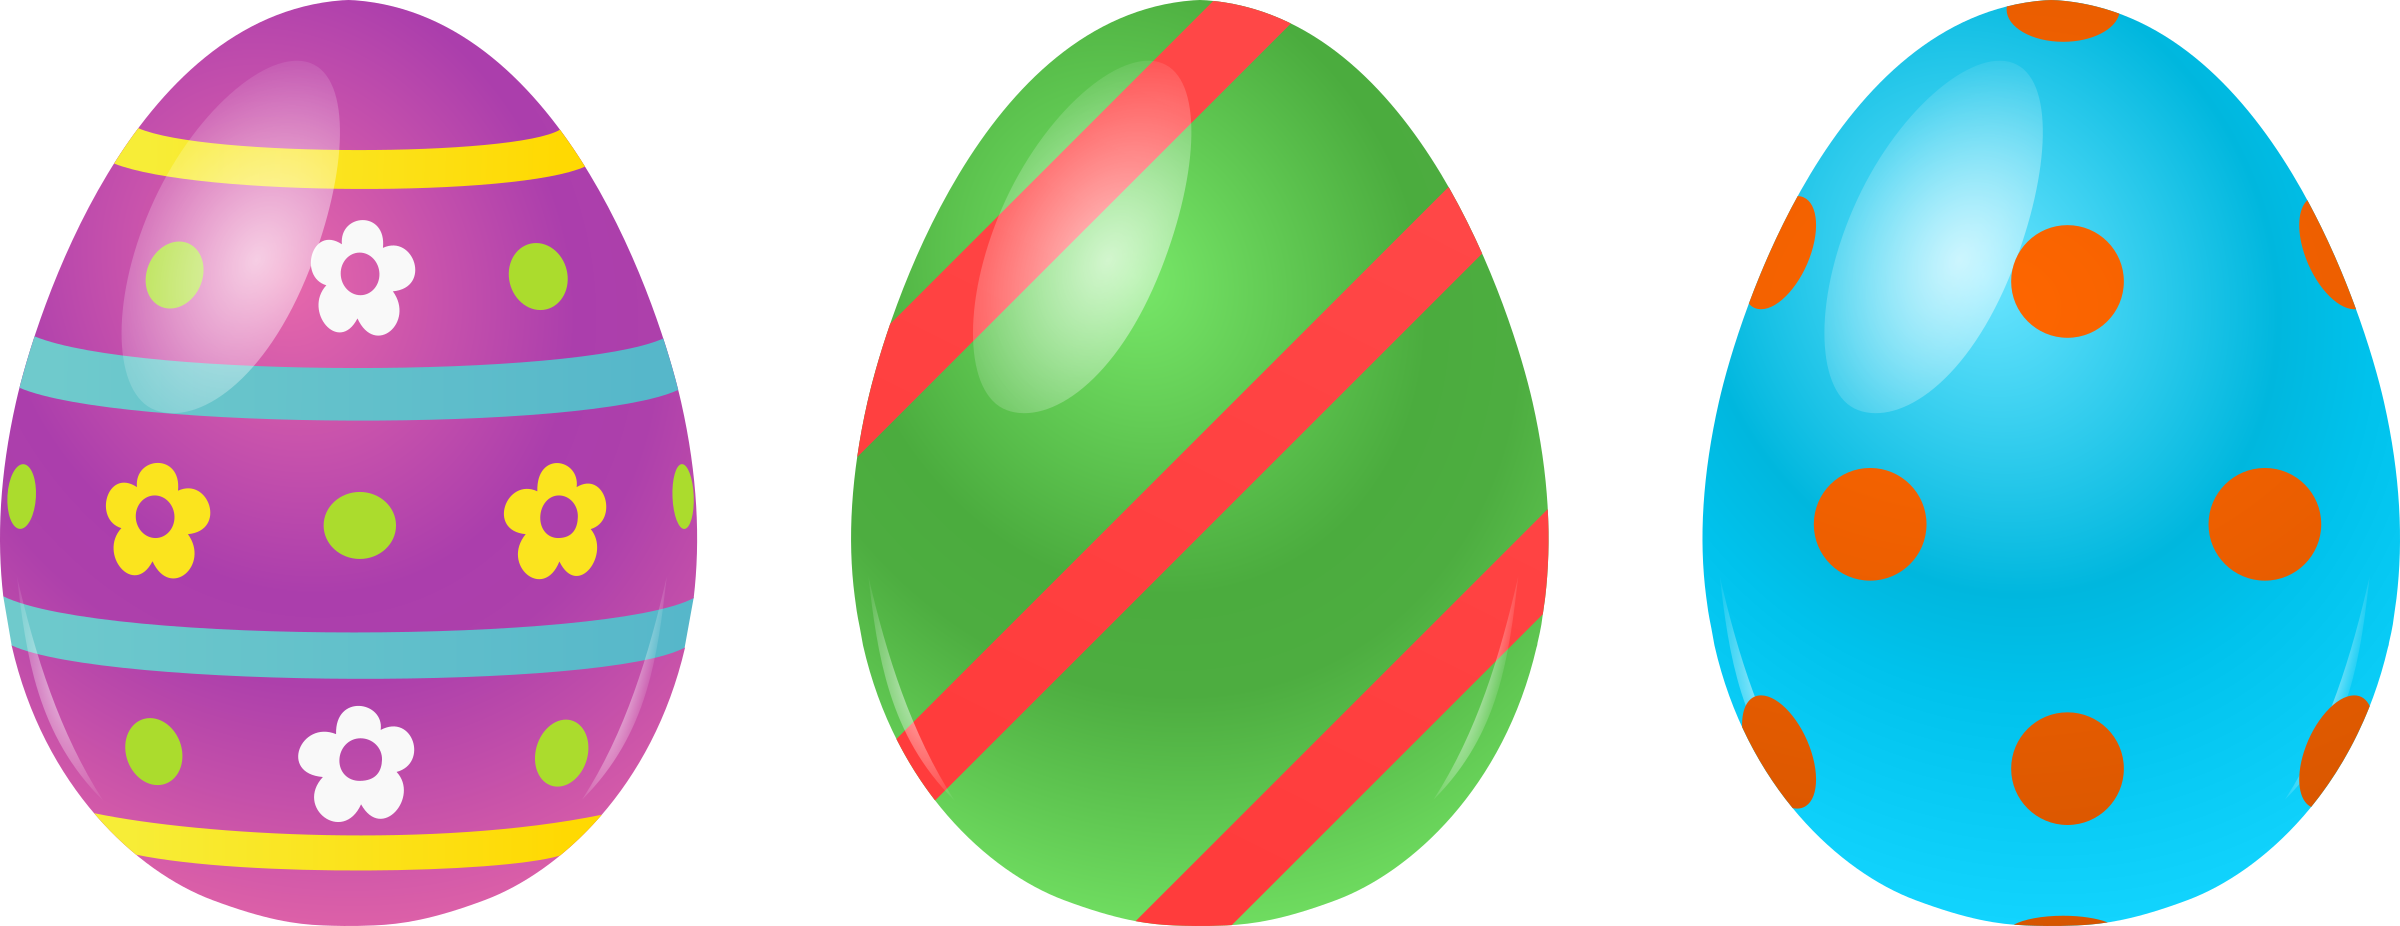 Colorful Easter Egg Download PNG Image